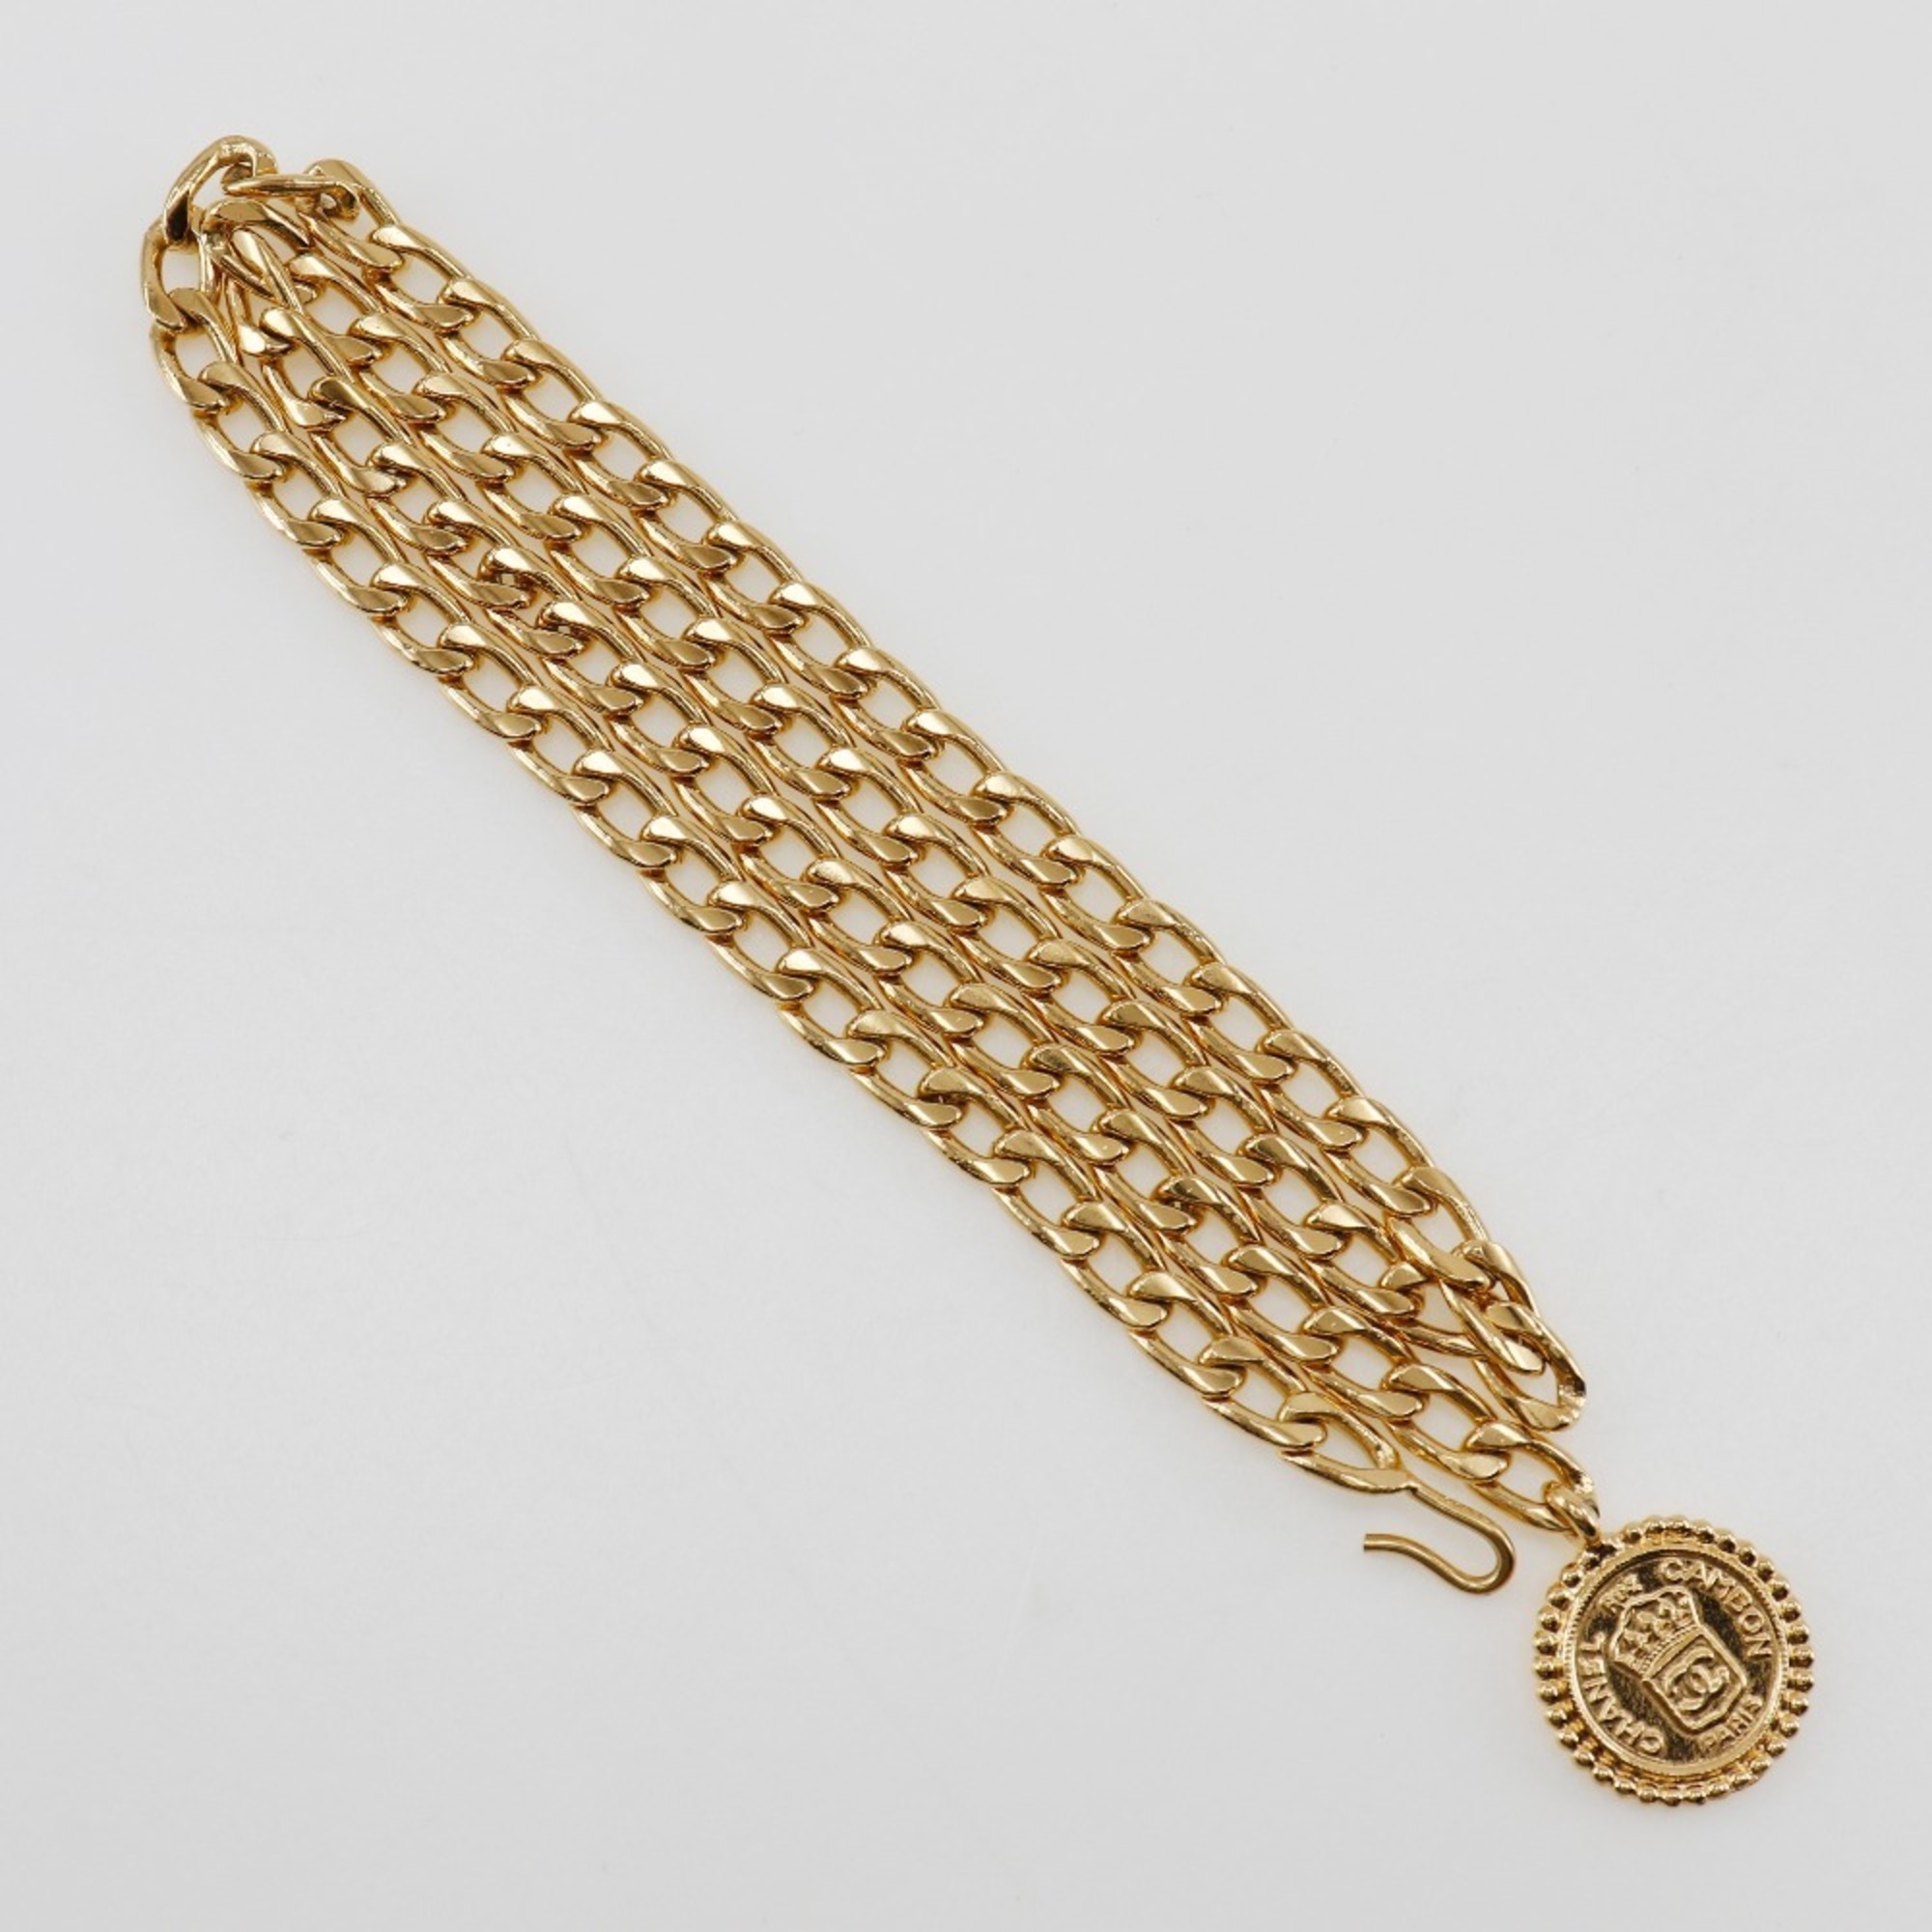 Chanel CHANEL Chain belt Belt Gold plated Women's